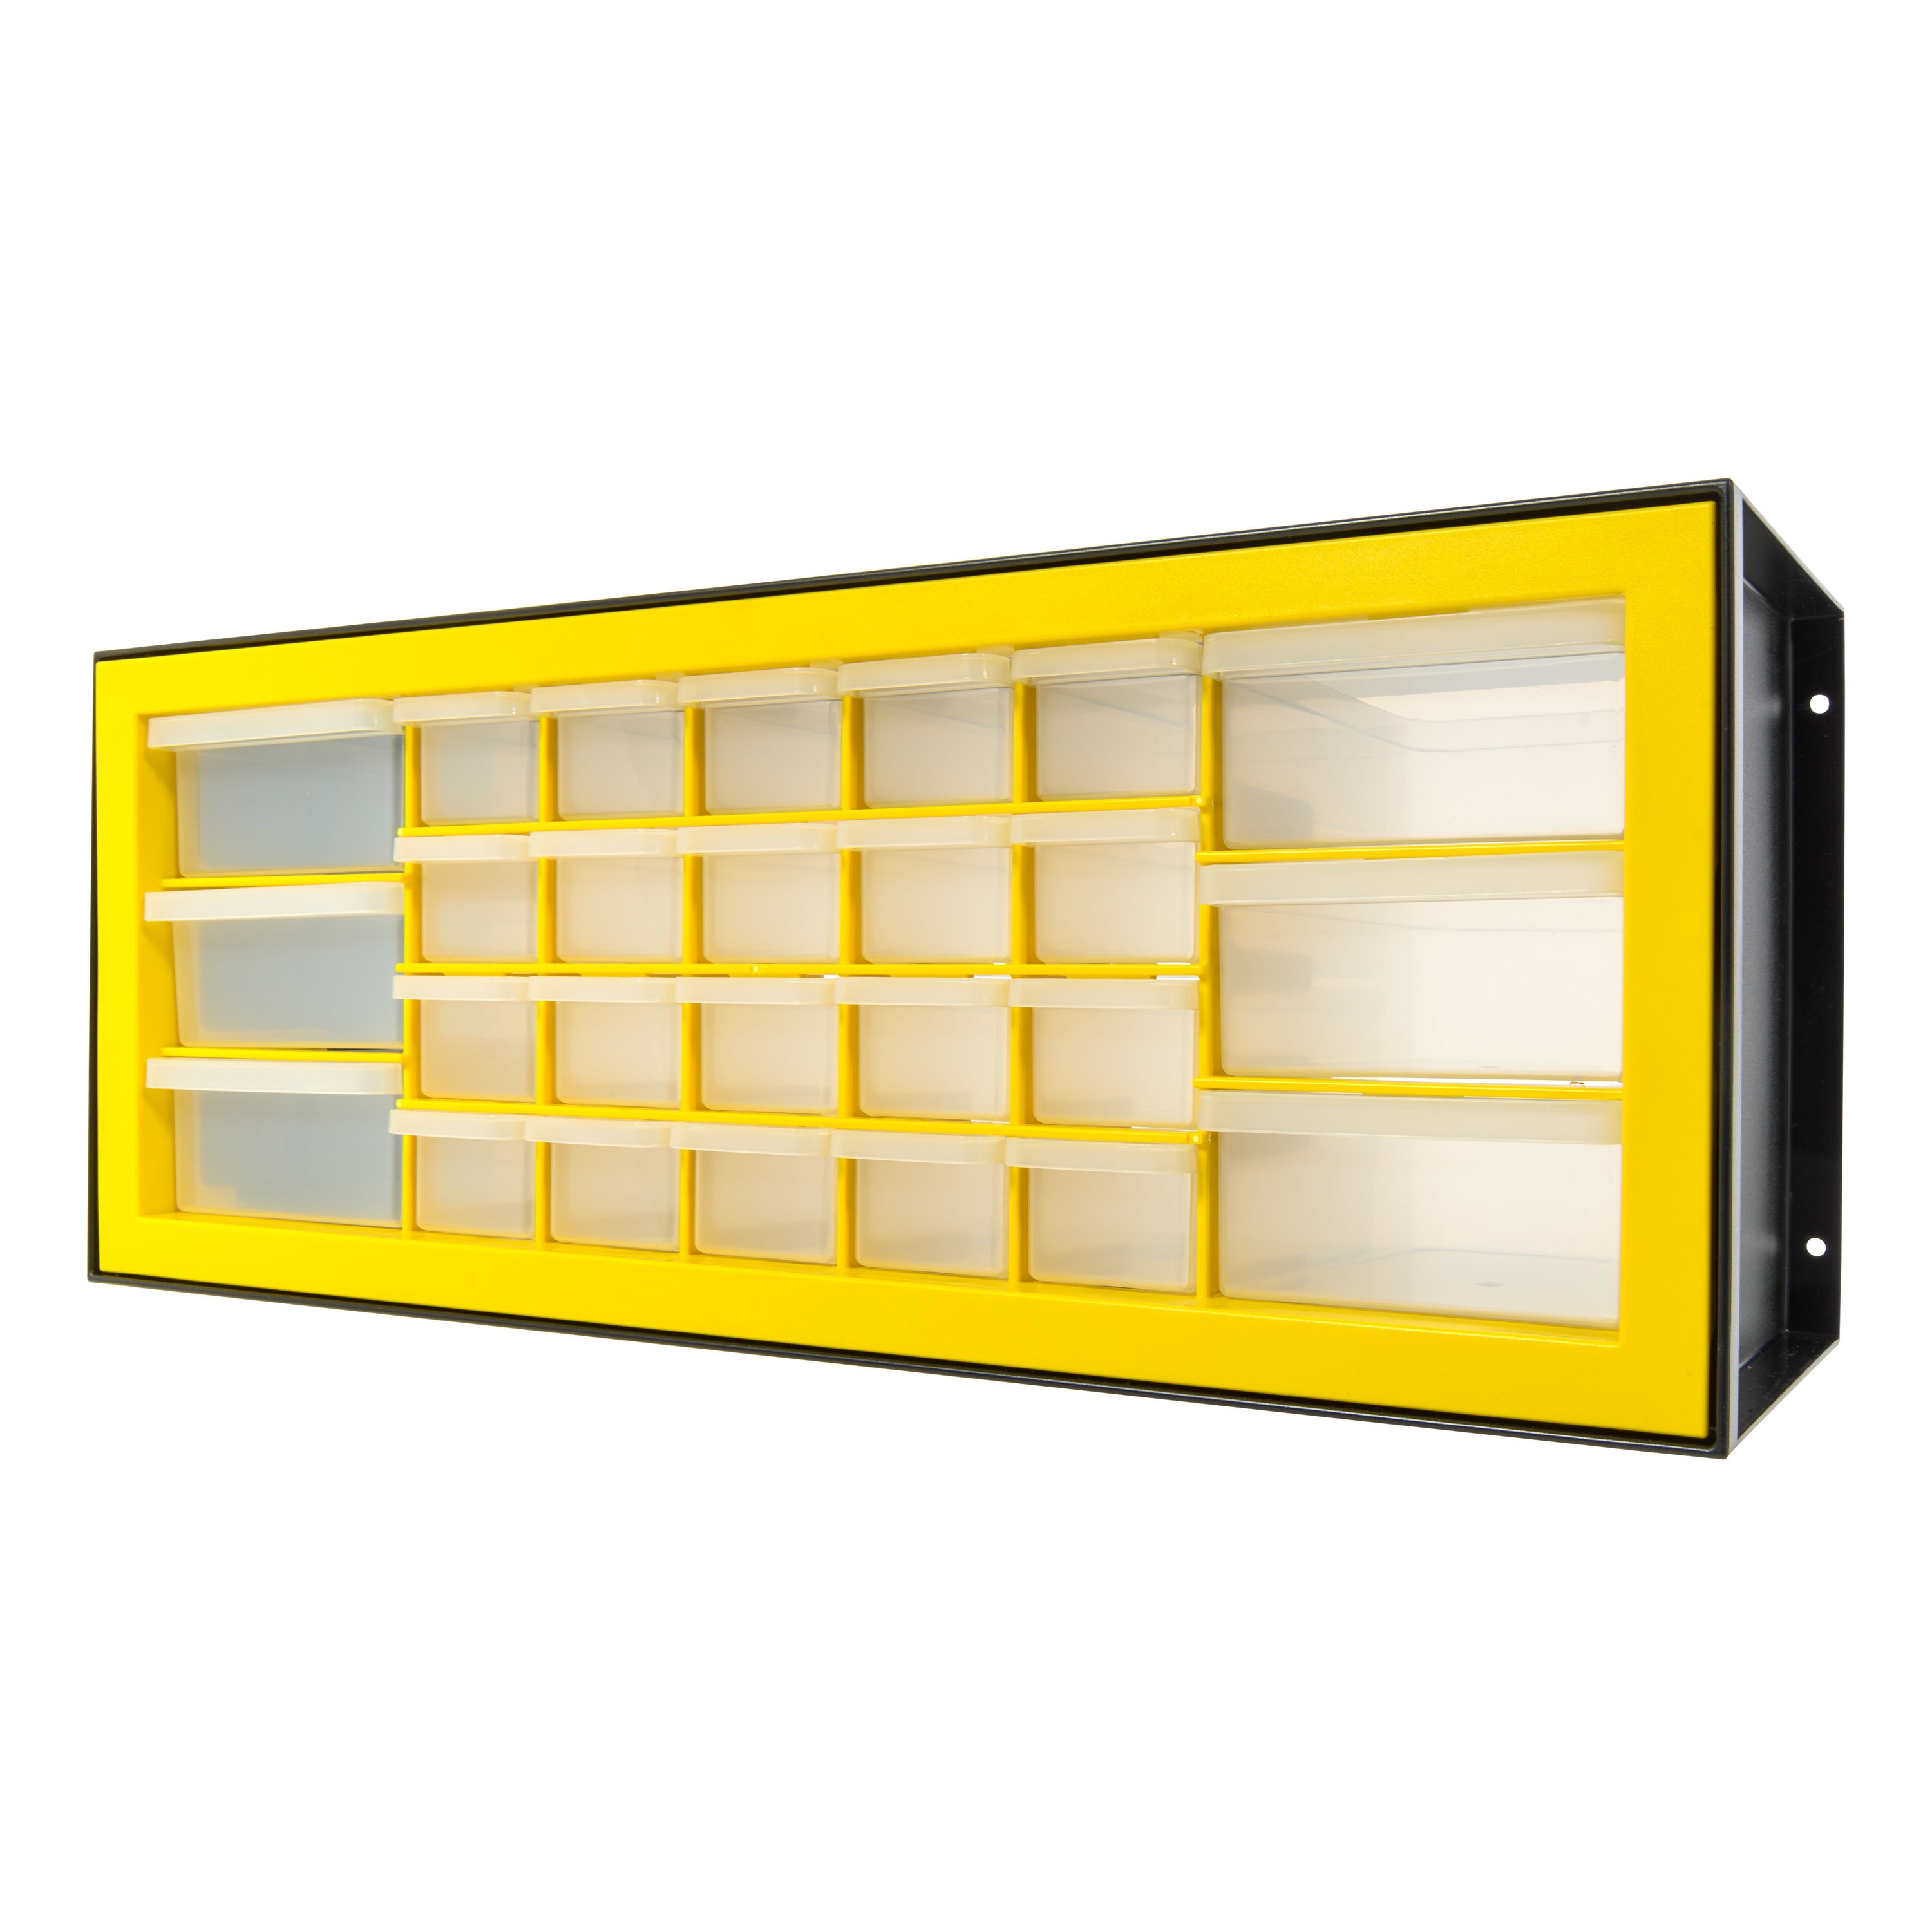 Iris 64 Drawer Parts Cabinet Black/Yellow